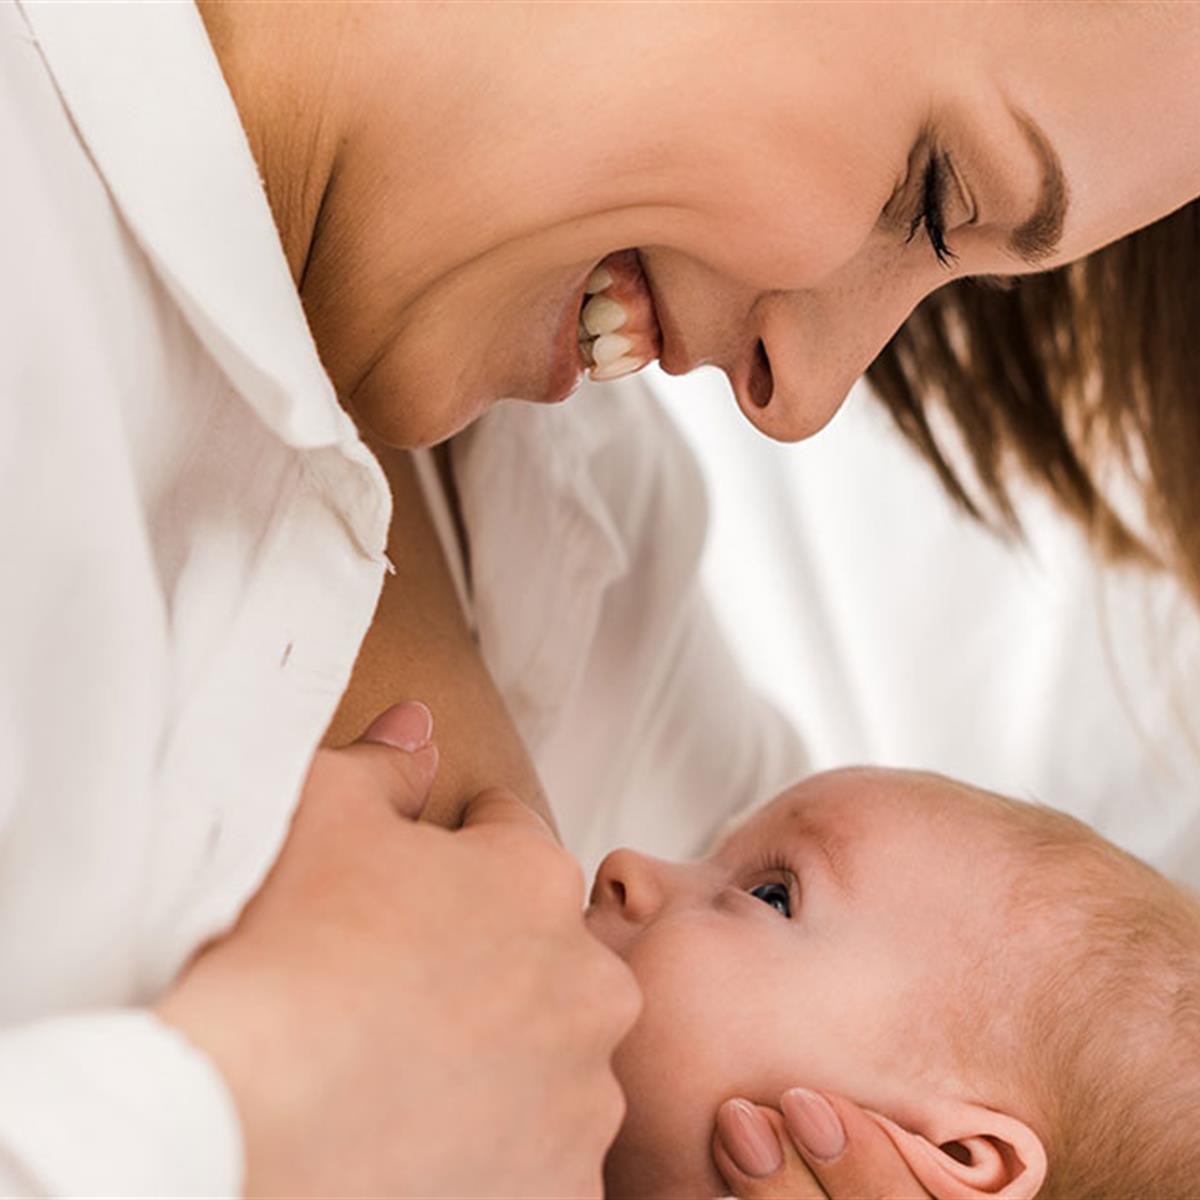 How To Stop Breastfeeding: 3 Methods